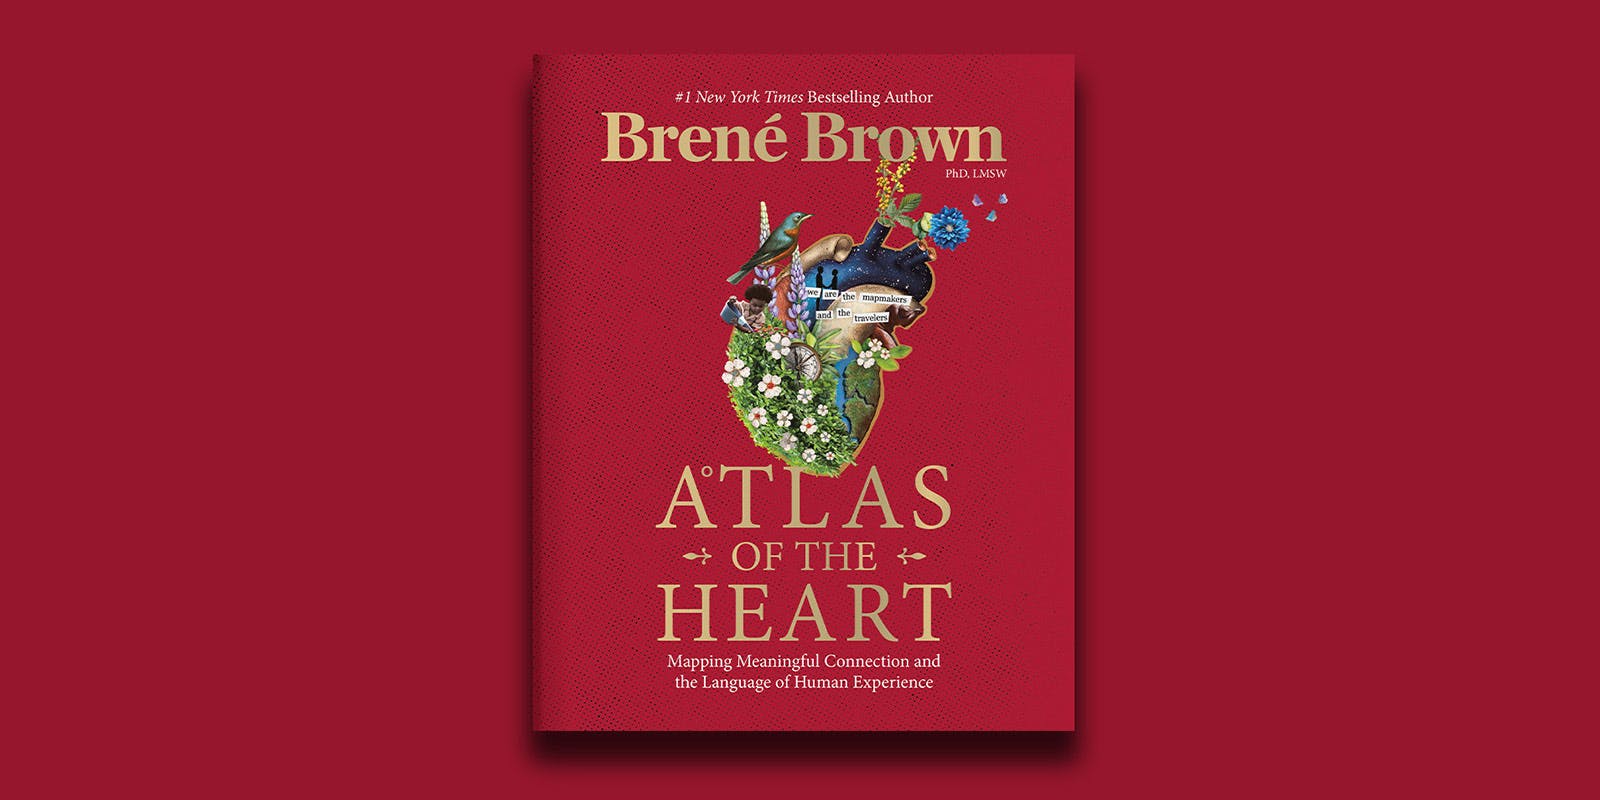 Dear reader: A letter from Brené Brown